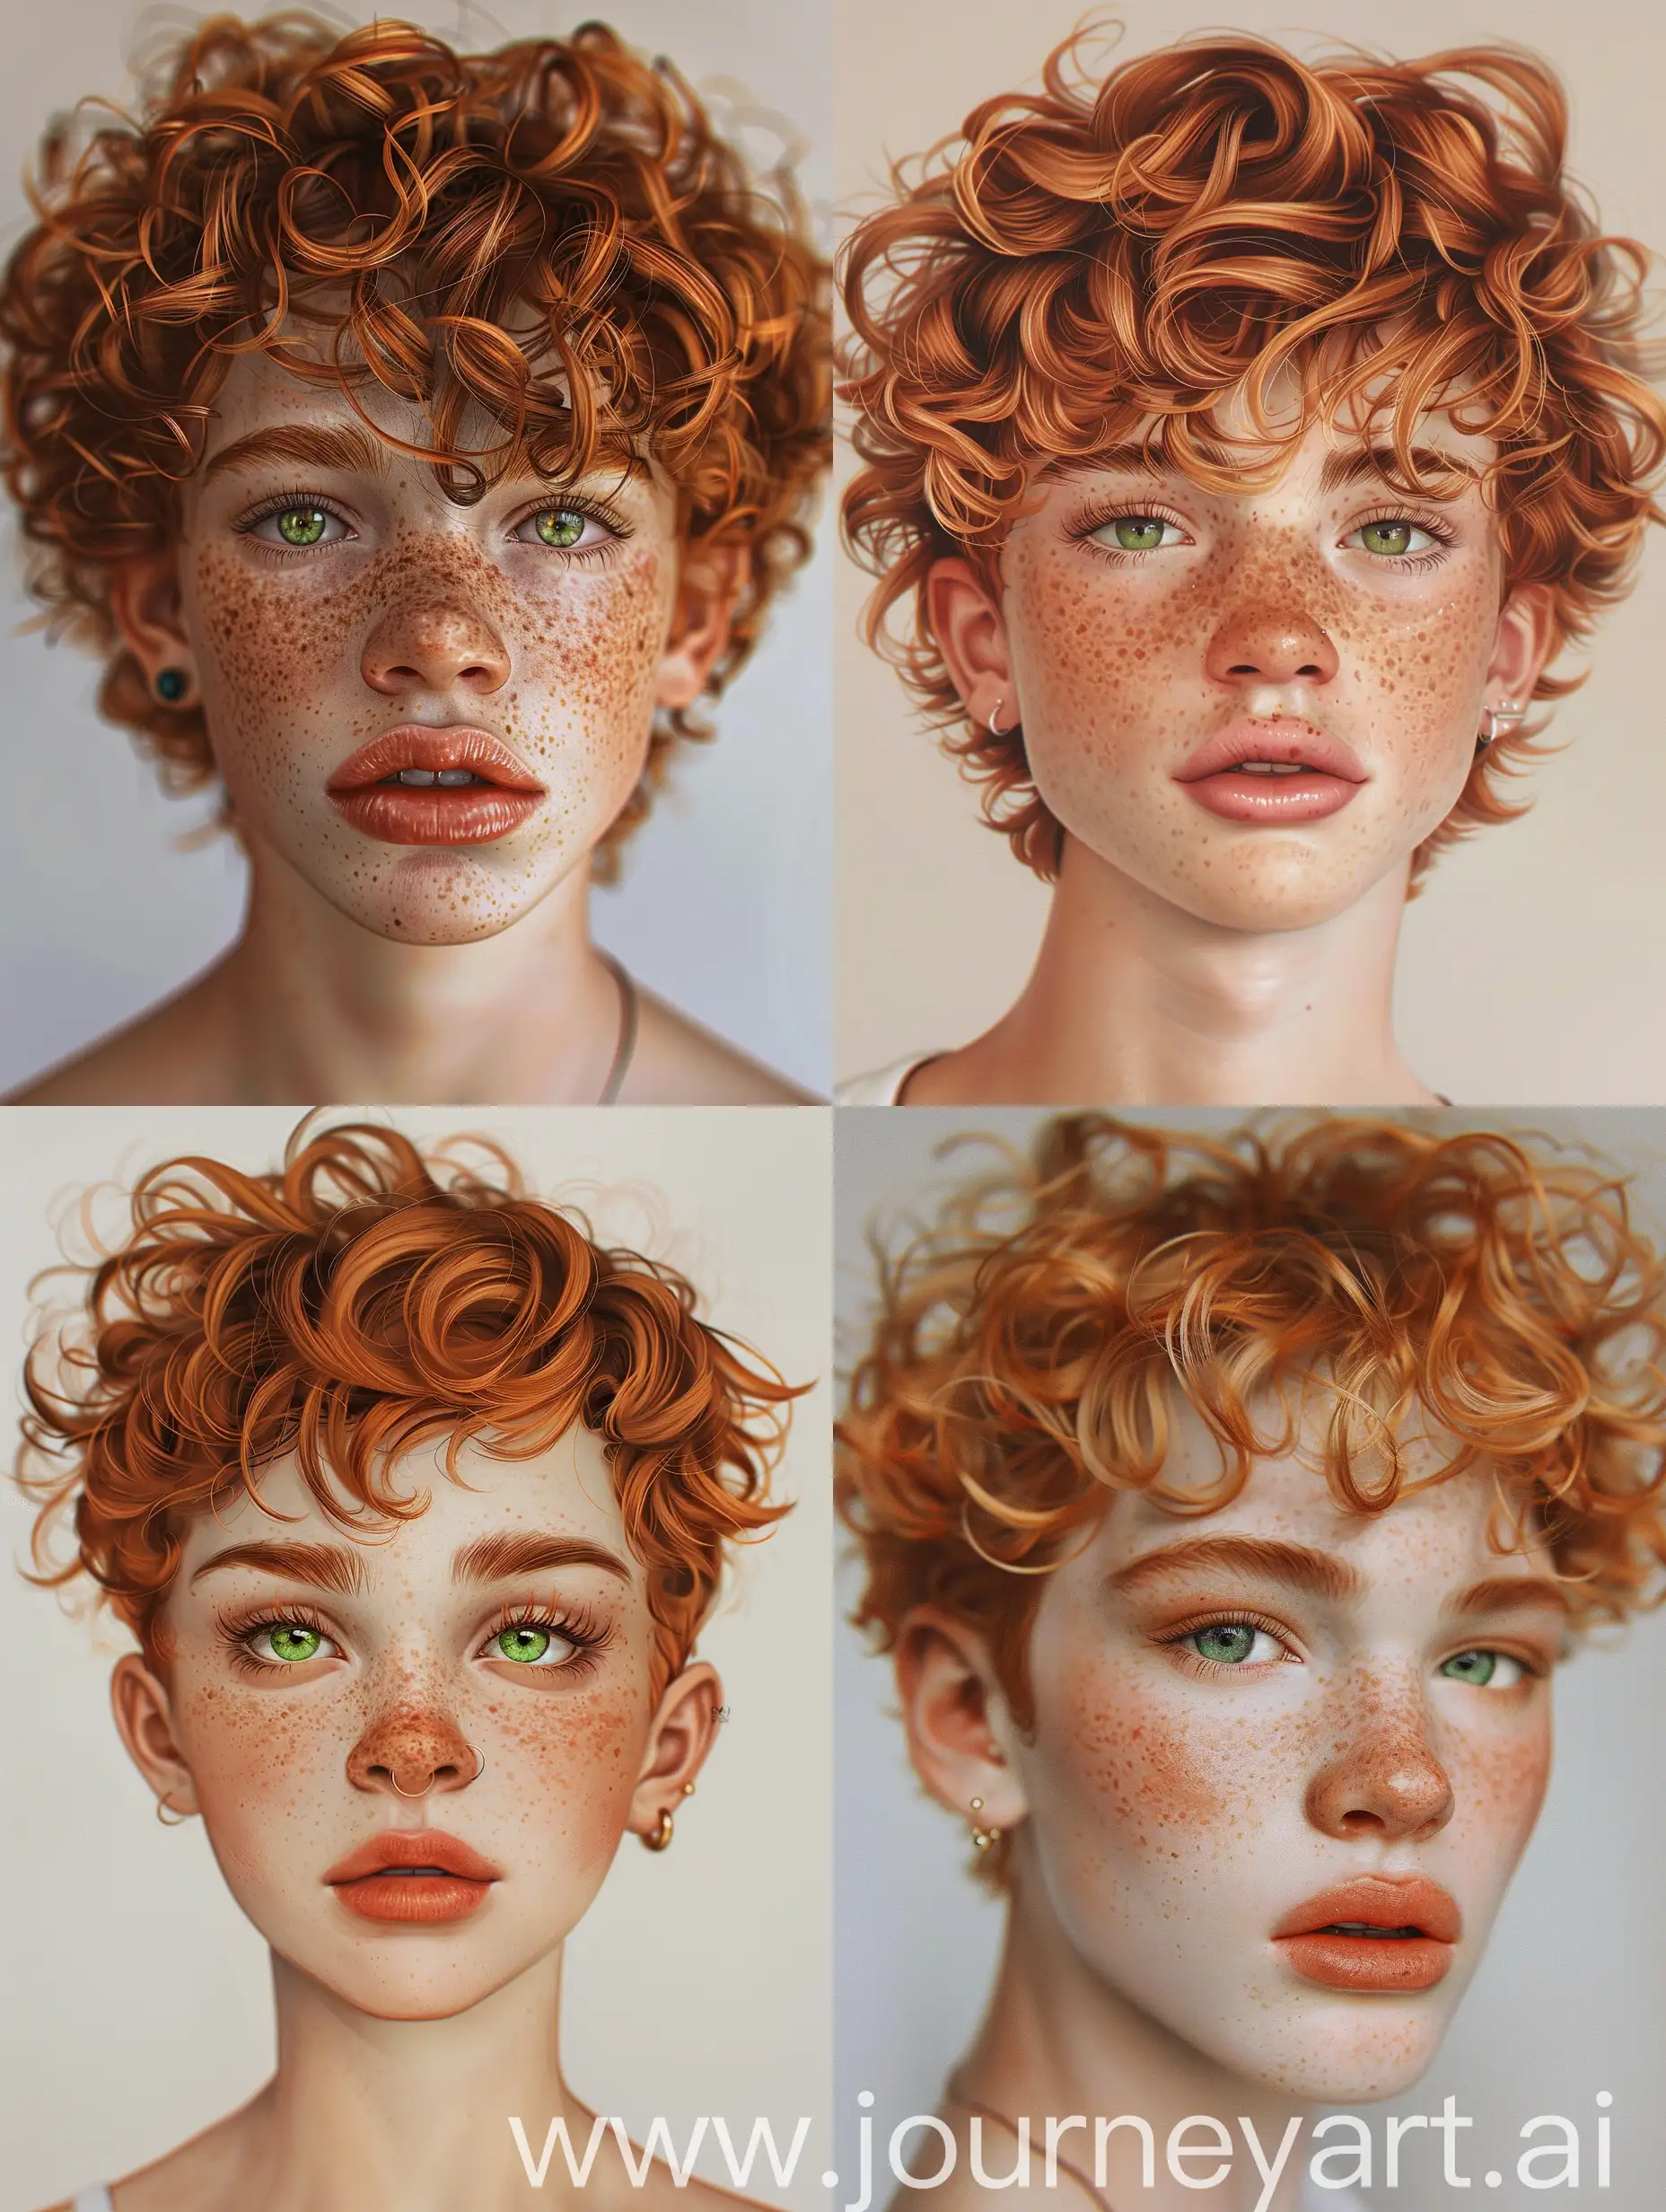 ((a boy)),curly hair,short ginger hair,green eyes,detailed eyes,eyelashes,full lips,freckles,blush,earring,light background